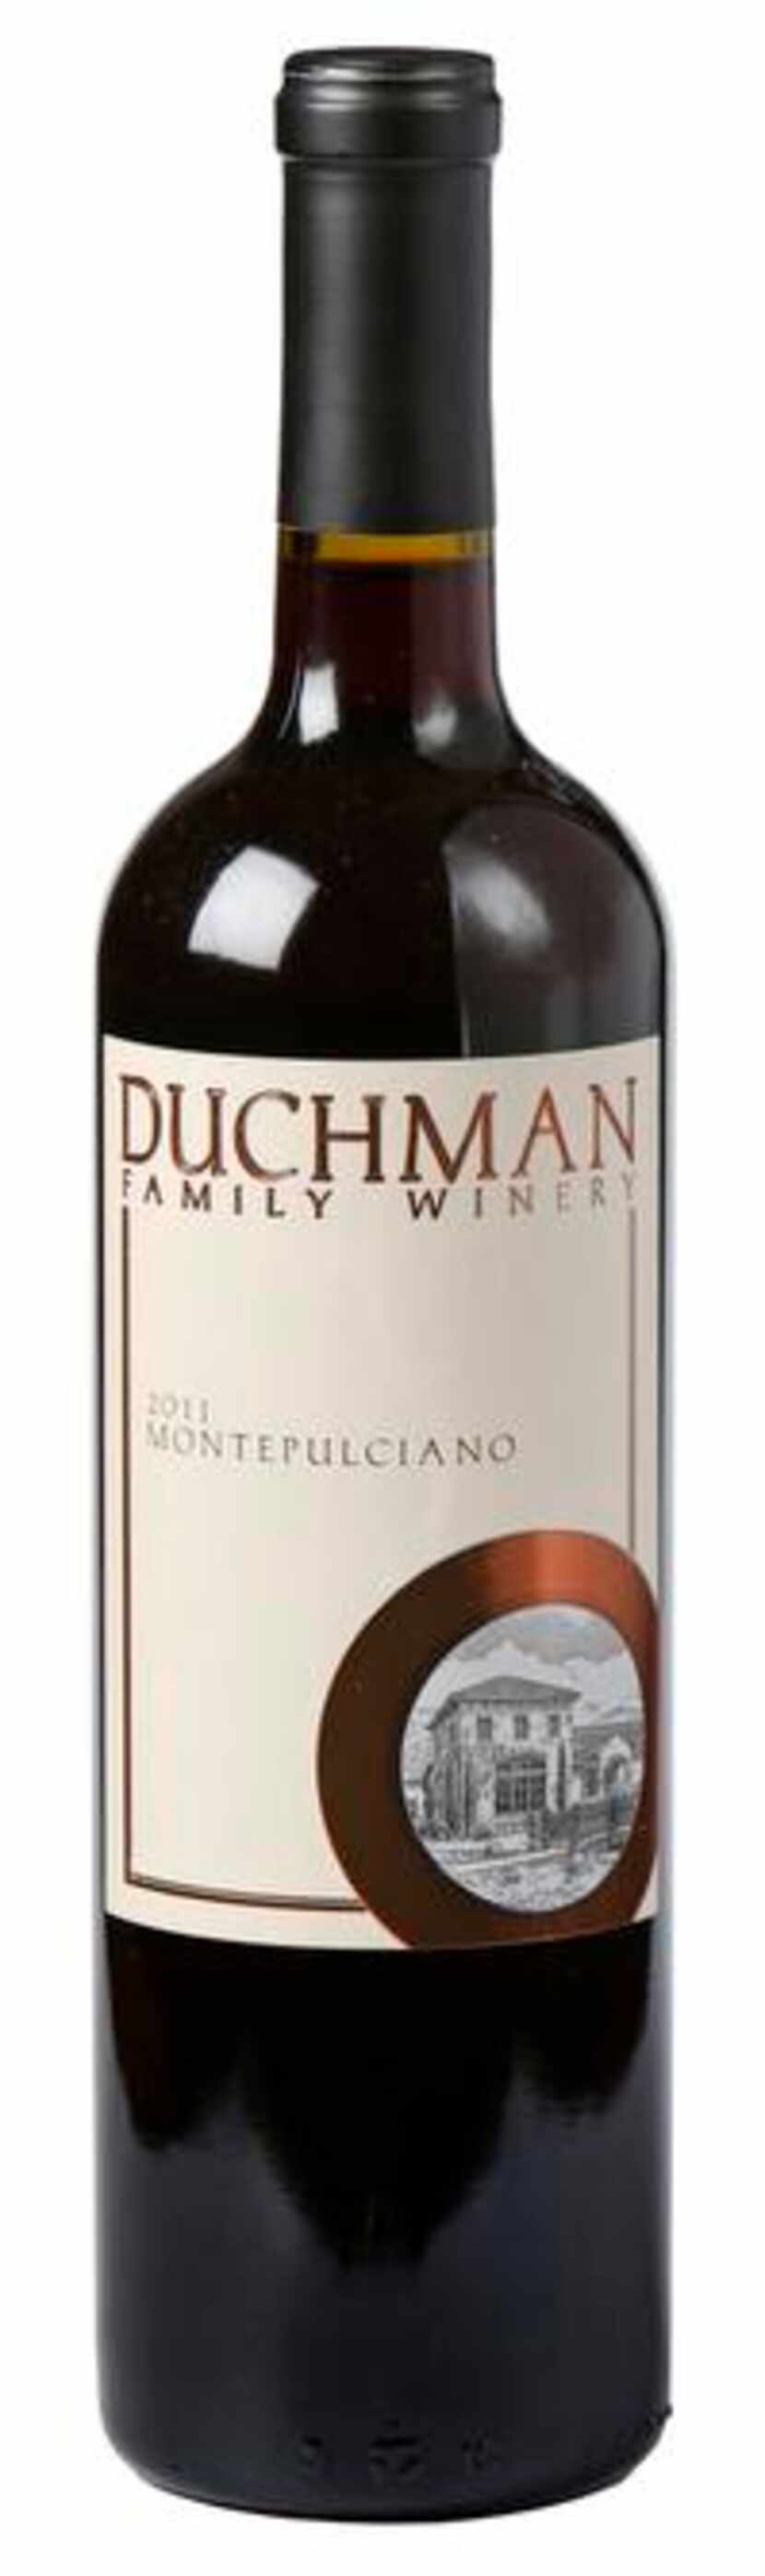 Duchman Family Winery Montepulciano, 2011